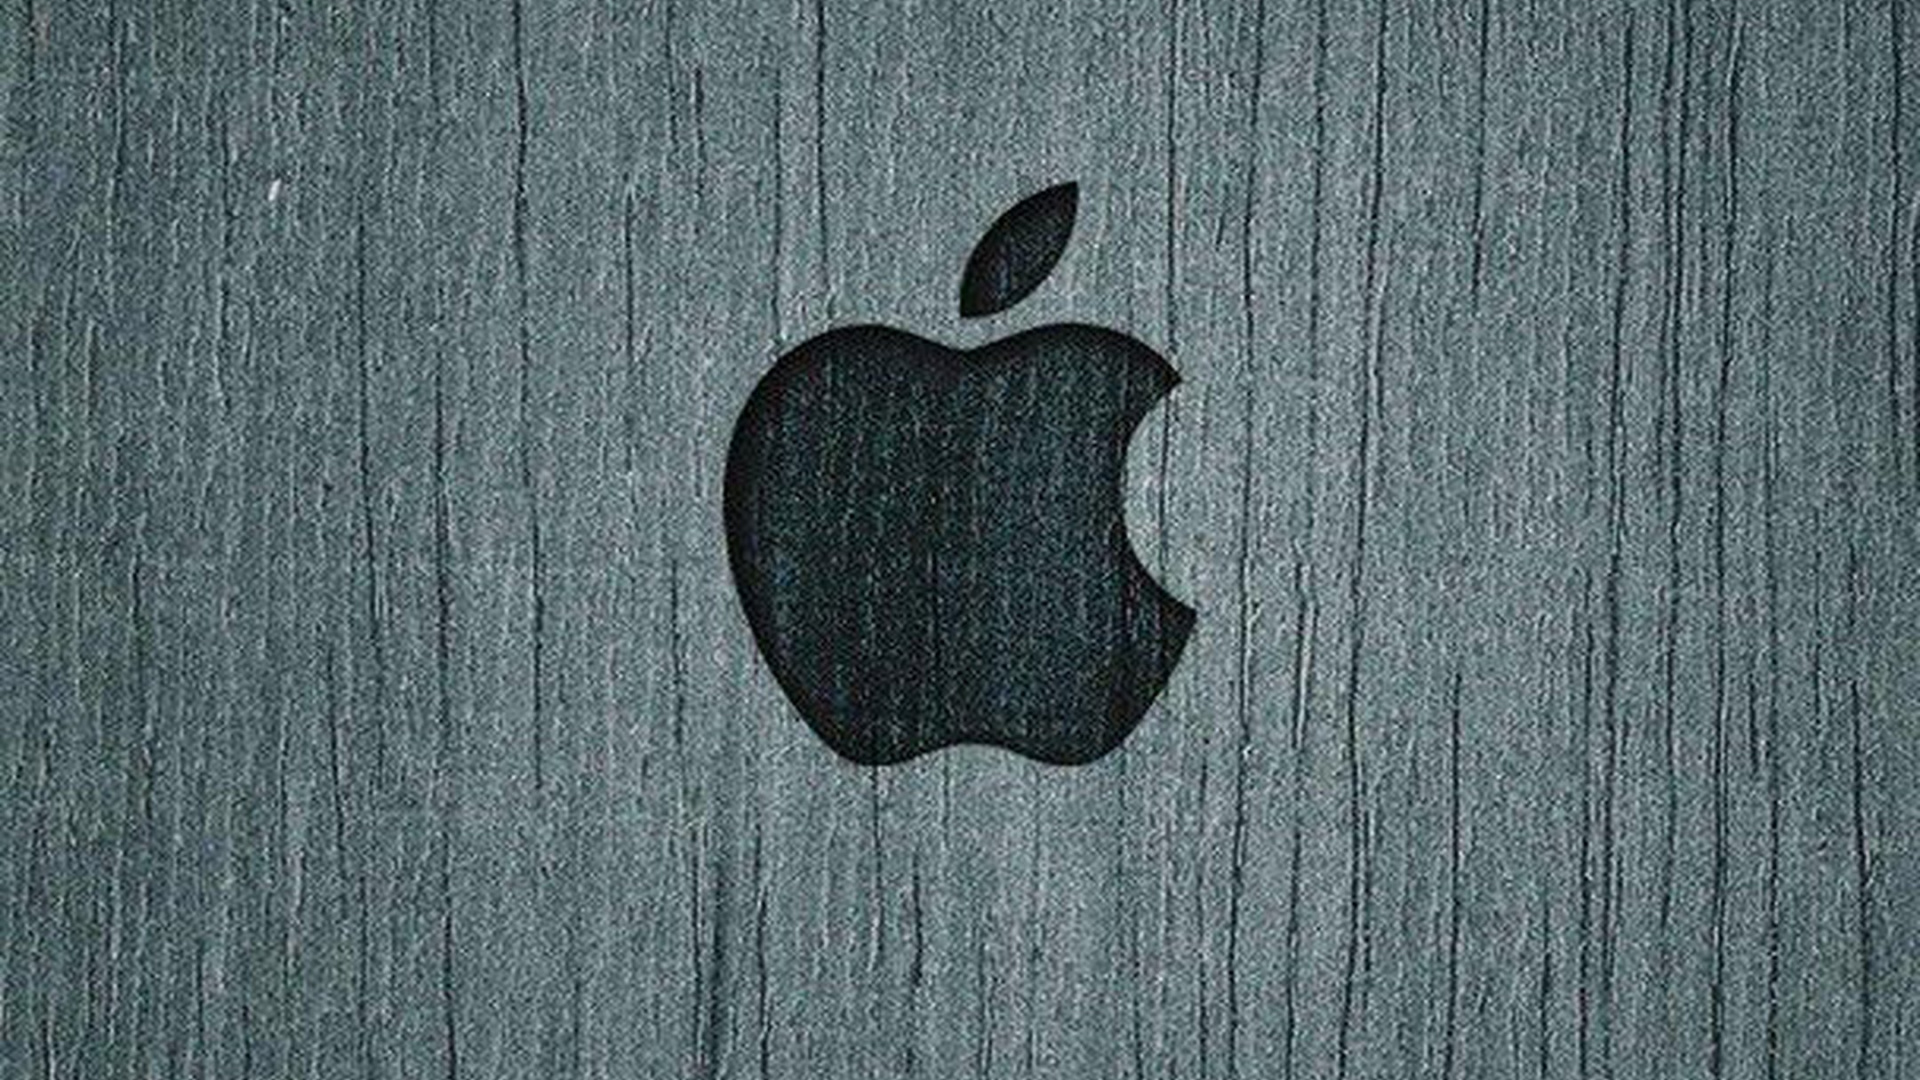 Обои на айфон без. Обои Графика эйпл. Обои на рабочий стол 1920х1080 яблоко на фоне ламината. Черное дерево на айфон. Apple яблоко текстура обои.